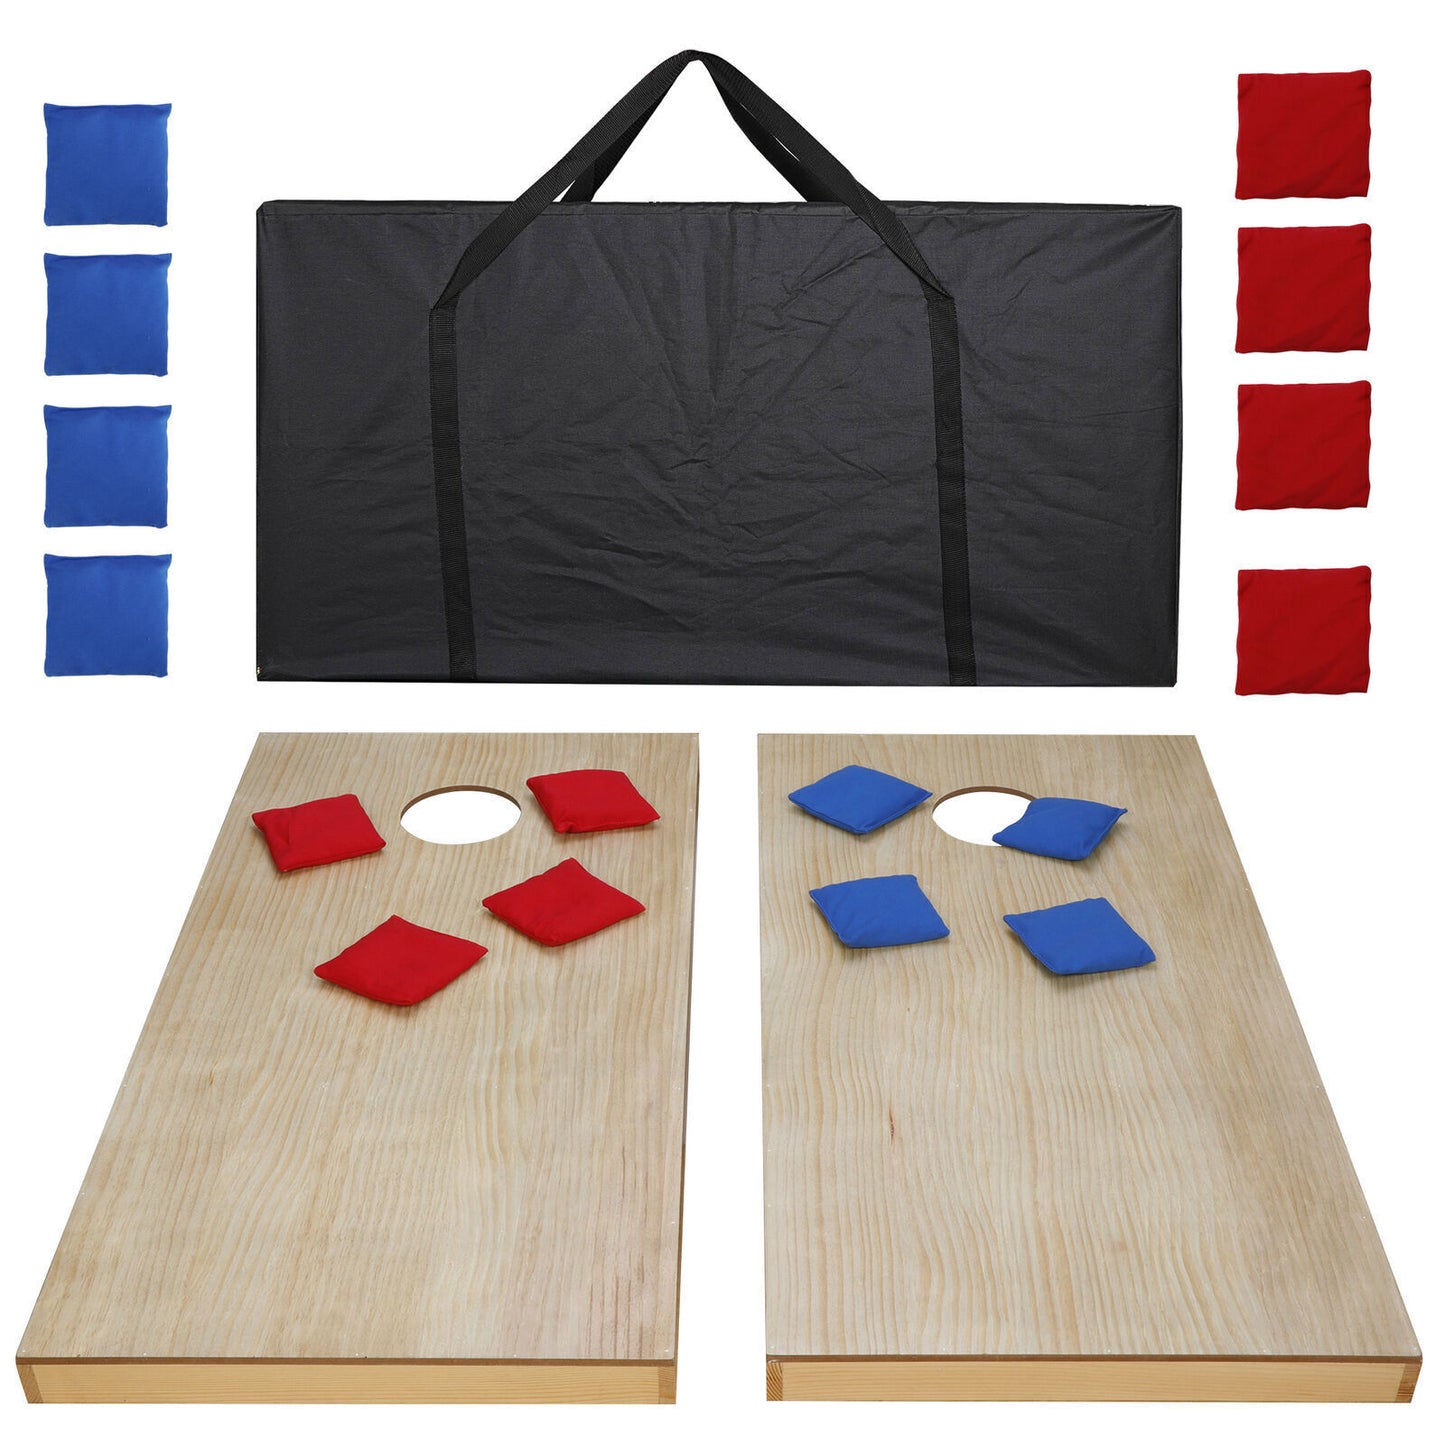 4x2' Foldable DIY Wooden Bean Bag Toss Cornhole Game Set of 2Boards & 8 Beanbags